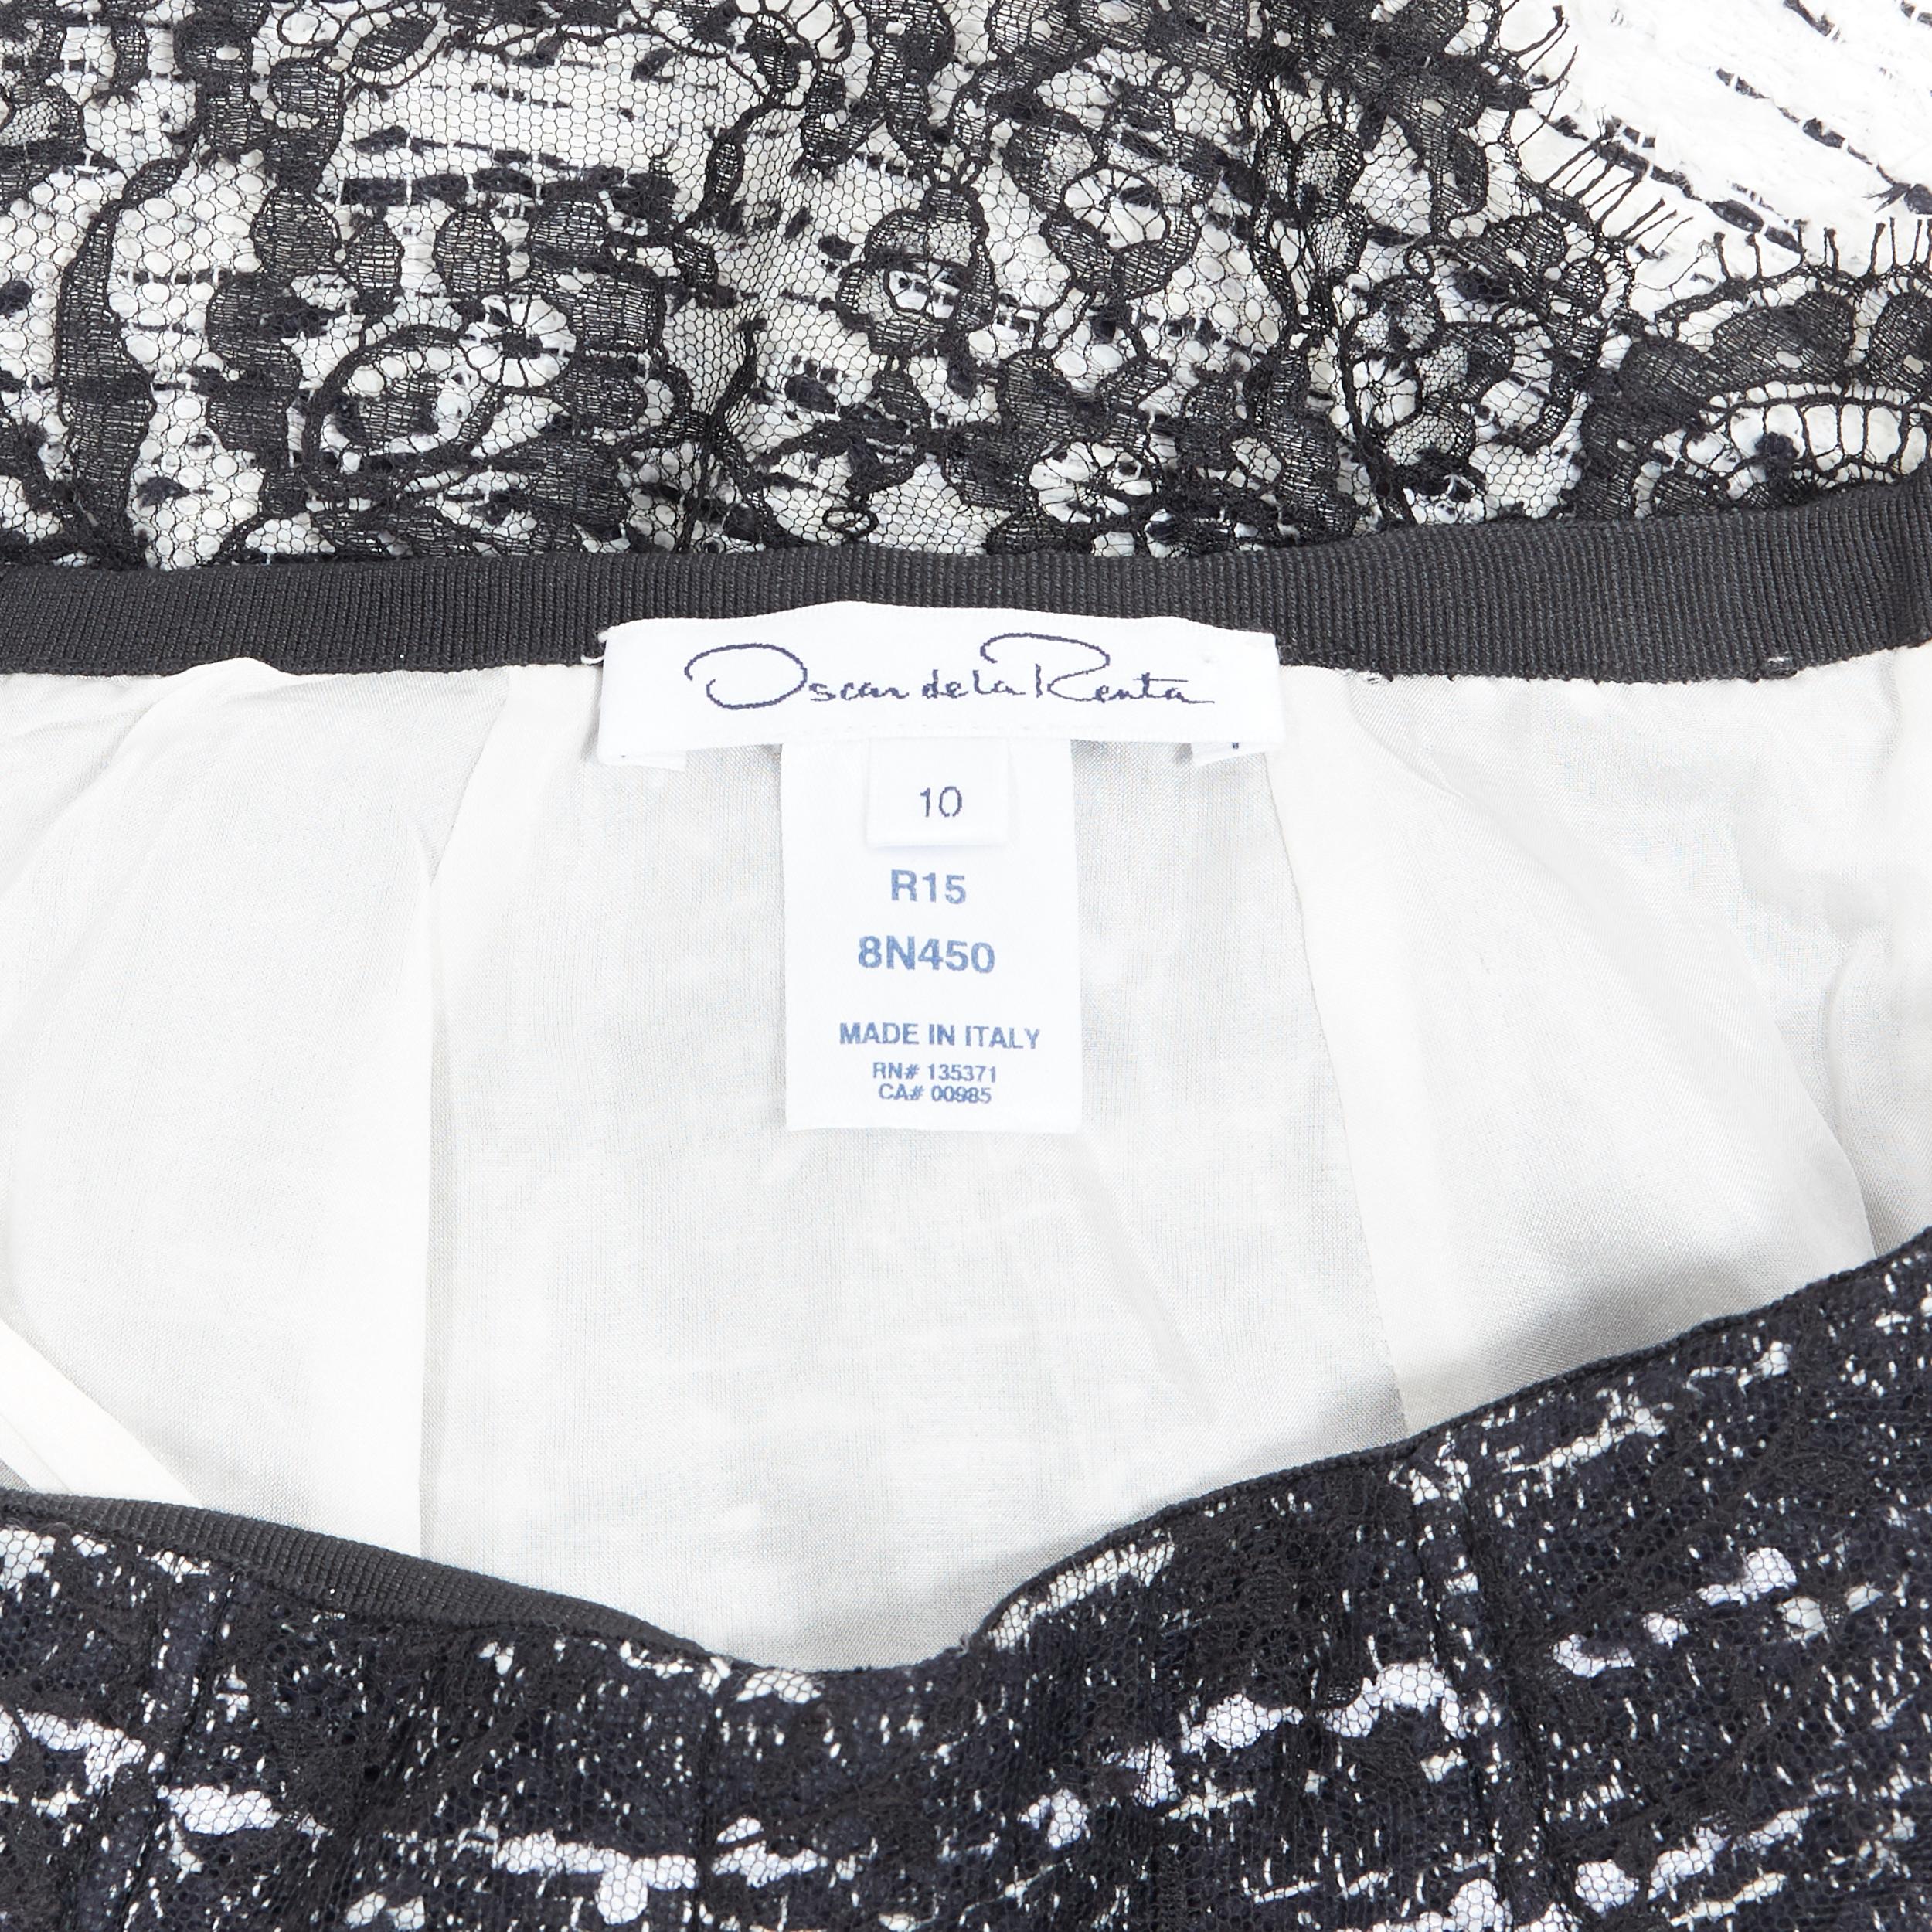 OSCAR DE LA RENTA R15 black white gradient tweed lace overlay mini skirt US10 2